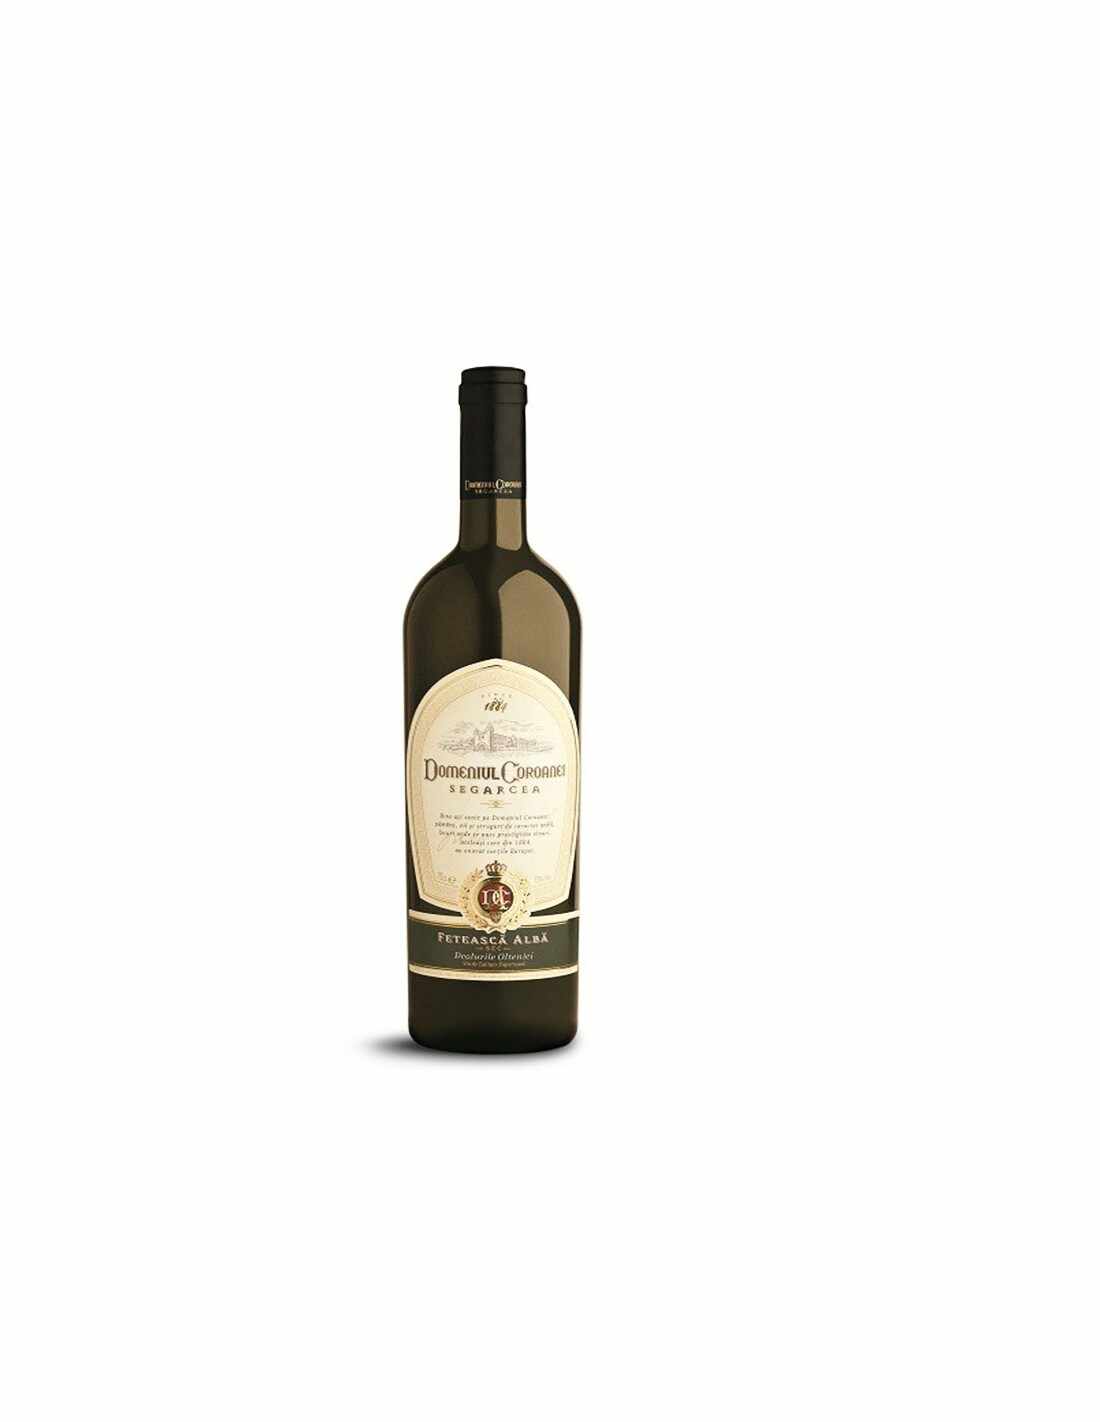 Vin alb sec, Feteasca Alba, Domeniul Coroanei Segarcea, 0.75L, 12% alc., Romania